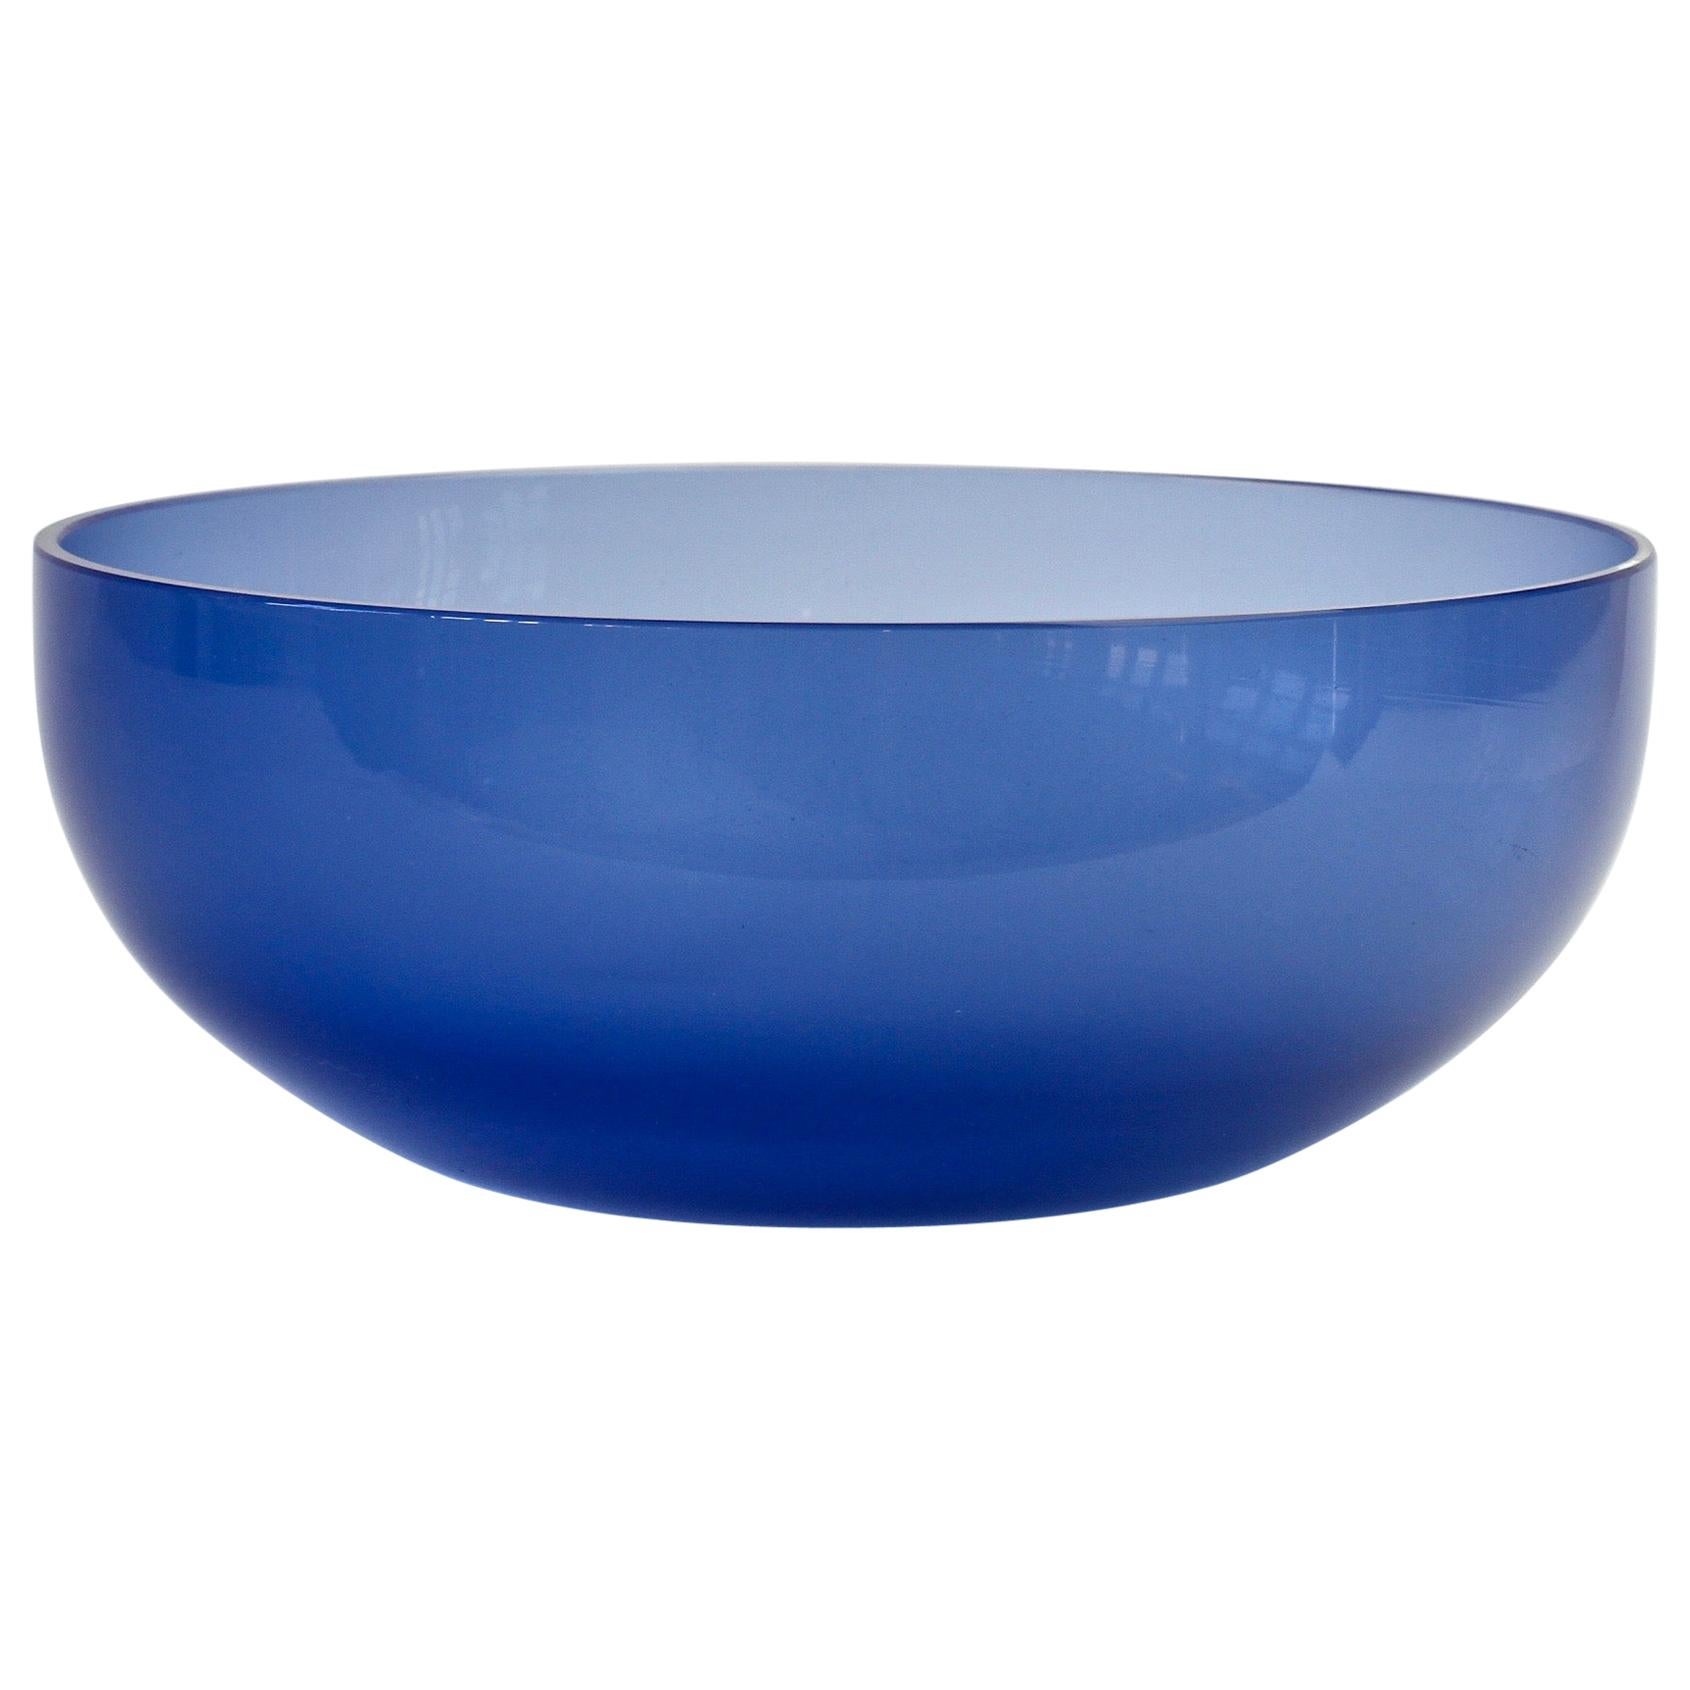 Antonio da Ros 'Attributed' for Cenedese Opaline Blue Colored Murano Glass Bowl